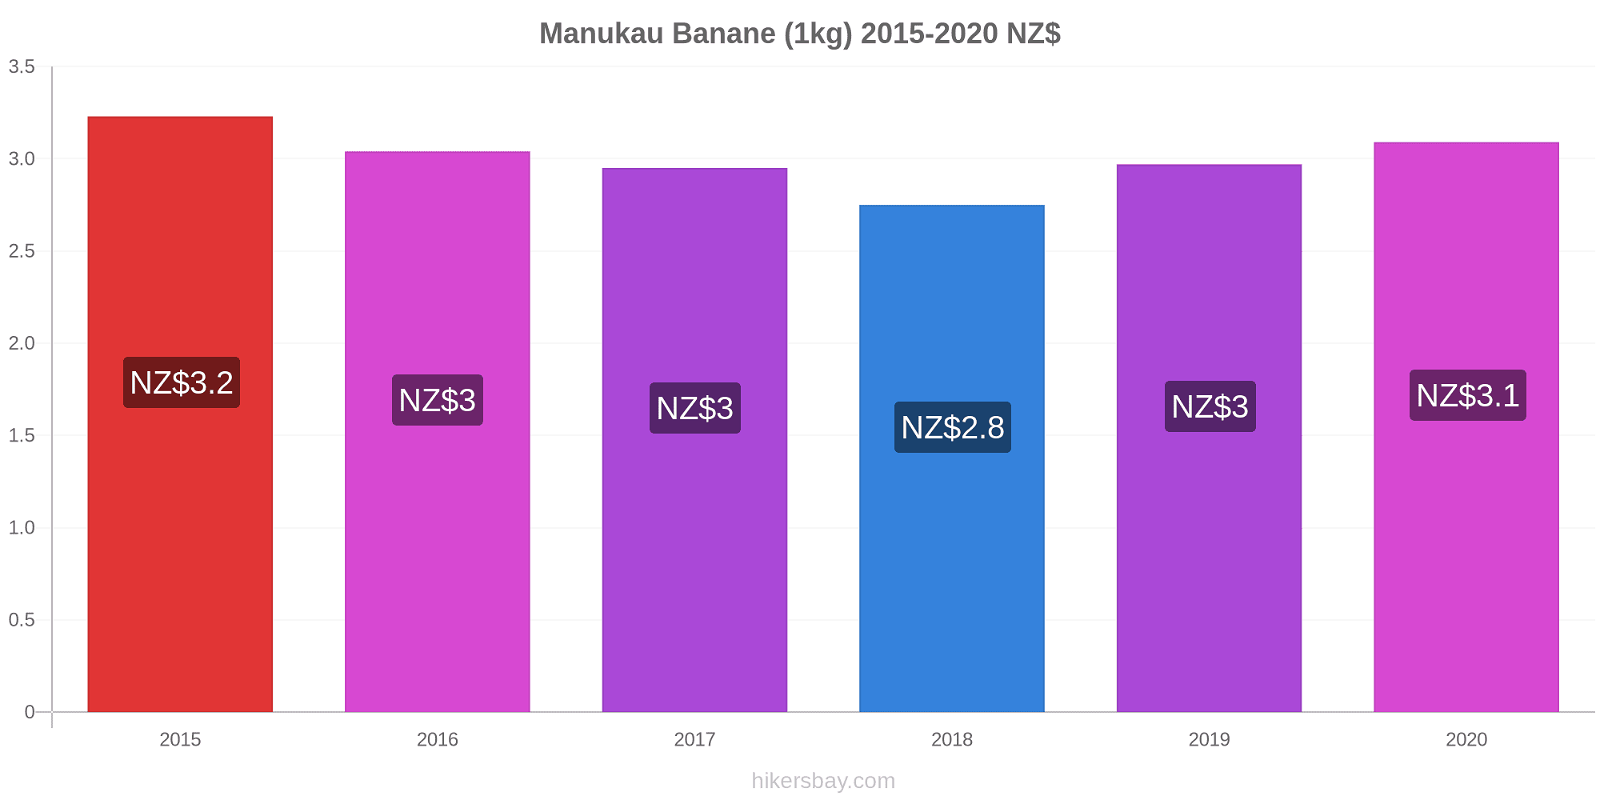 Manukau variazioni di prezzo Banana (1kg) hikersbay.com